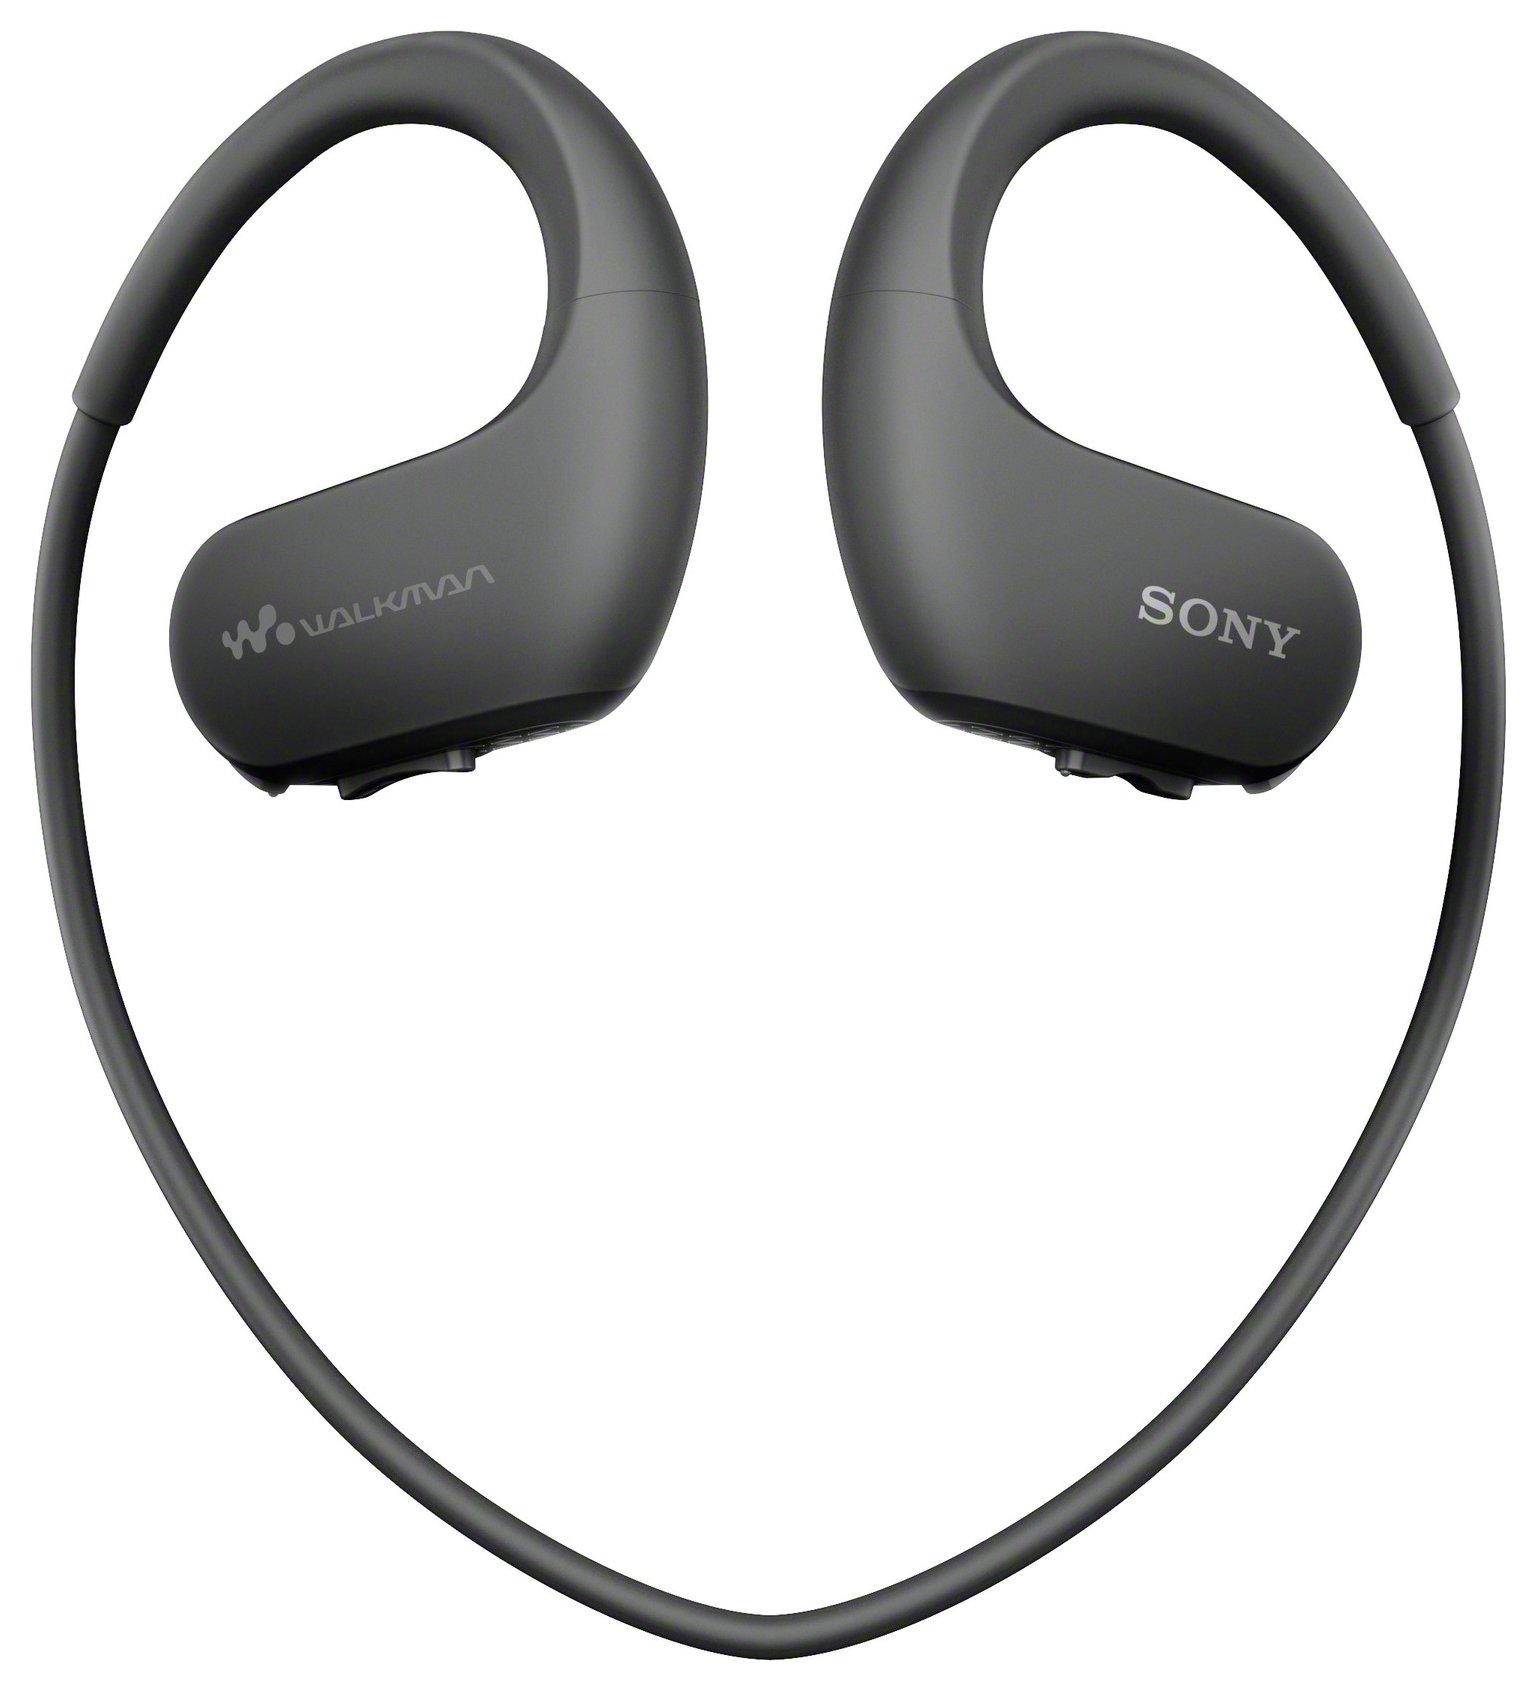 Sony NWWS413 Walkman 4GB Waterproof MP3 Player Review